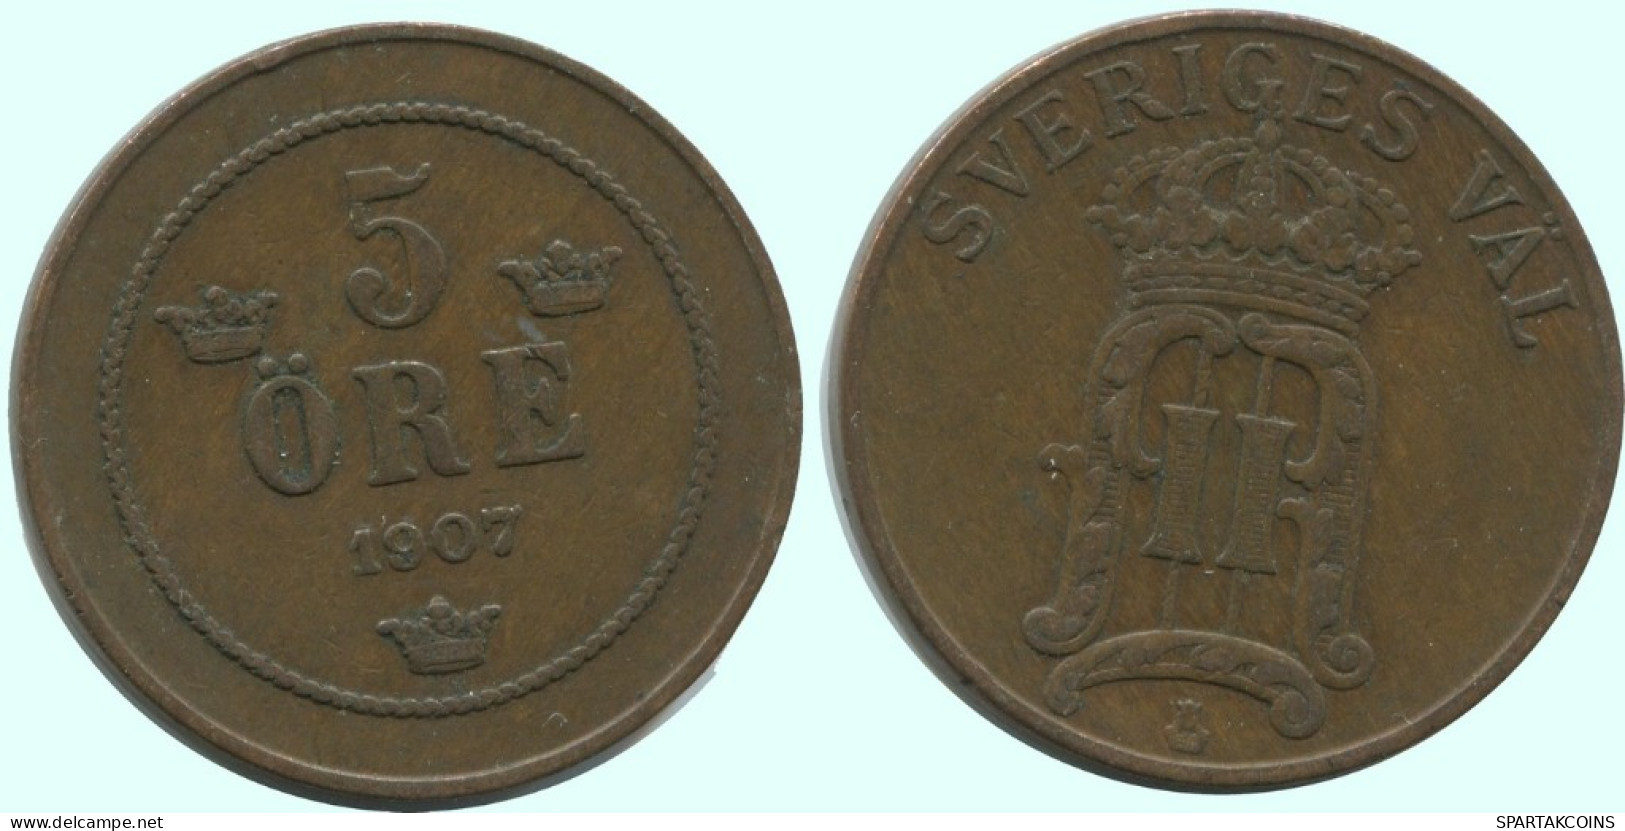 5 ORE 1907 SWEDEN Coin #AC684.2.U.A - Schweden